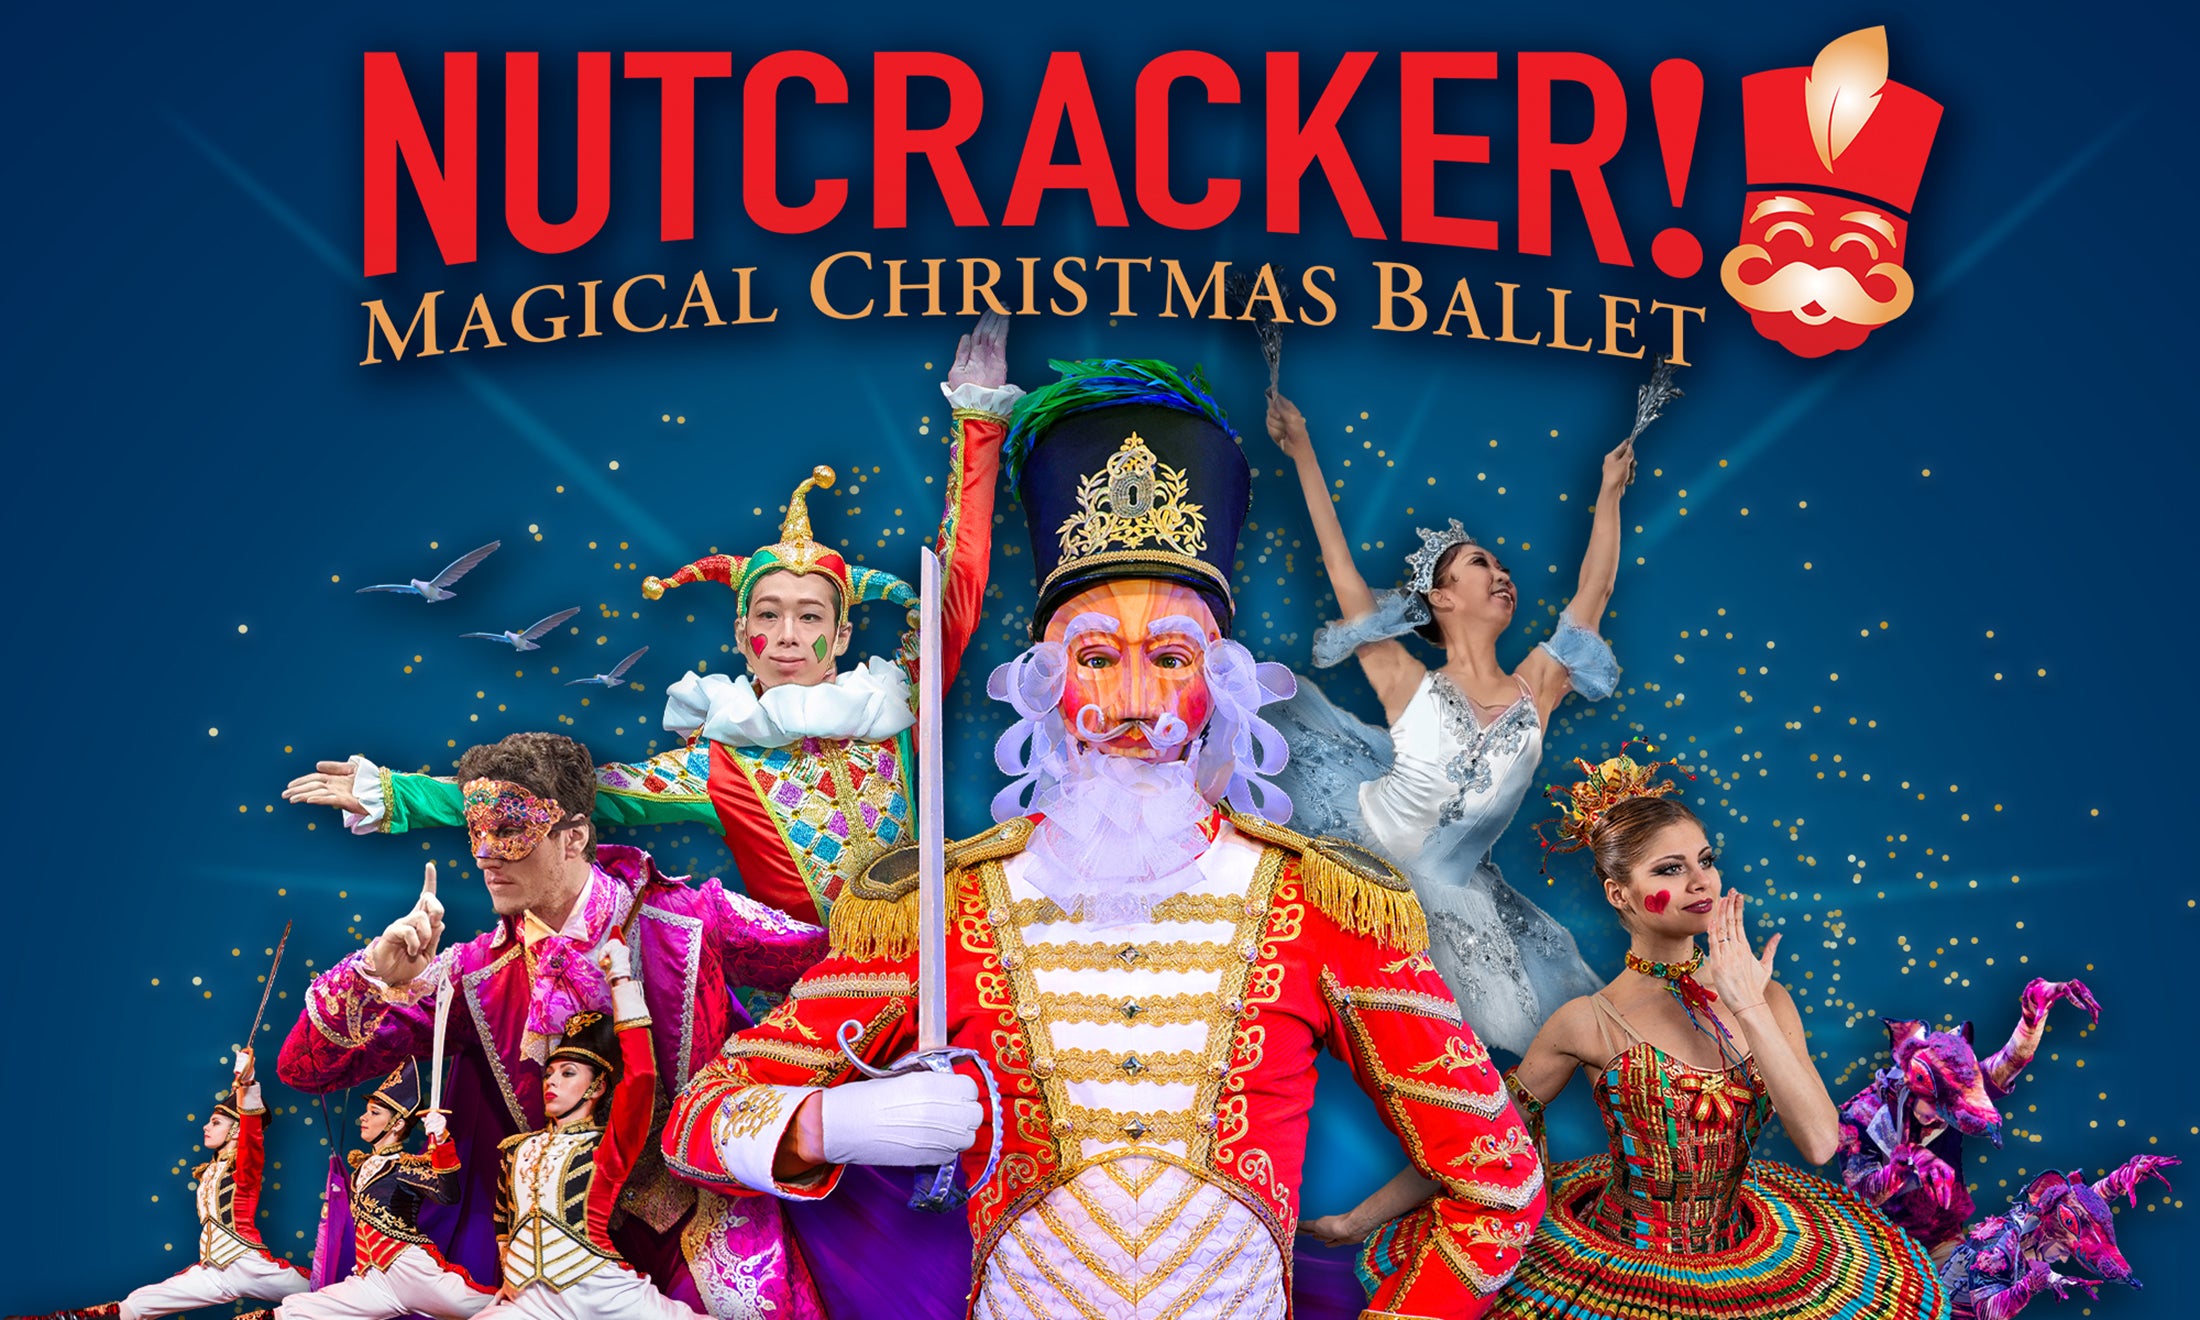 Nutcracker! Magical Christmas Ballet at Bob Hope Theatre